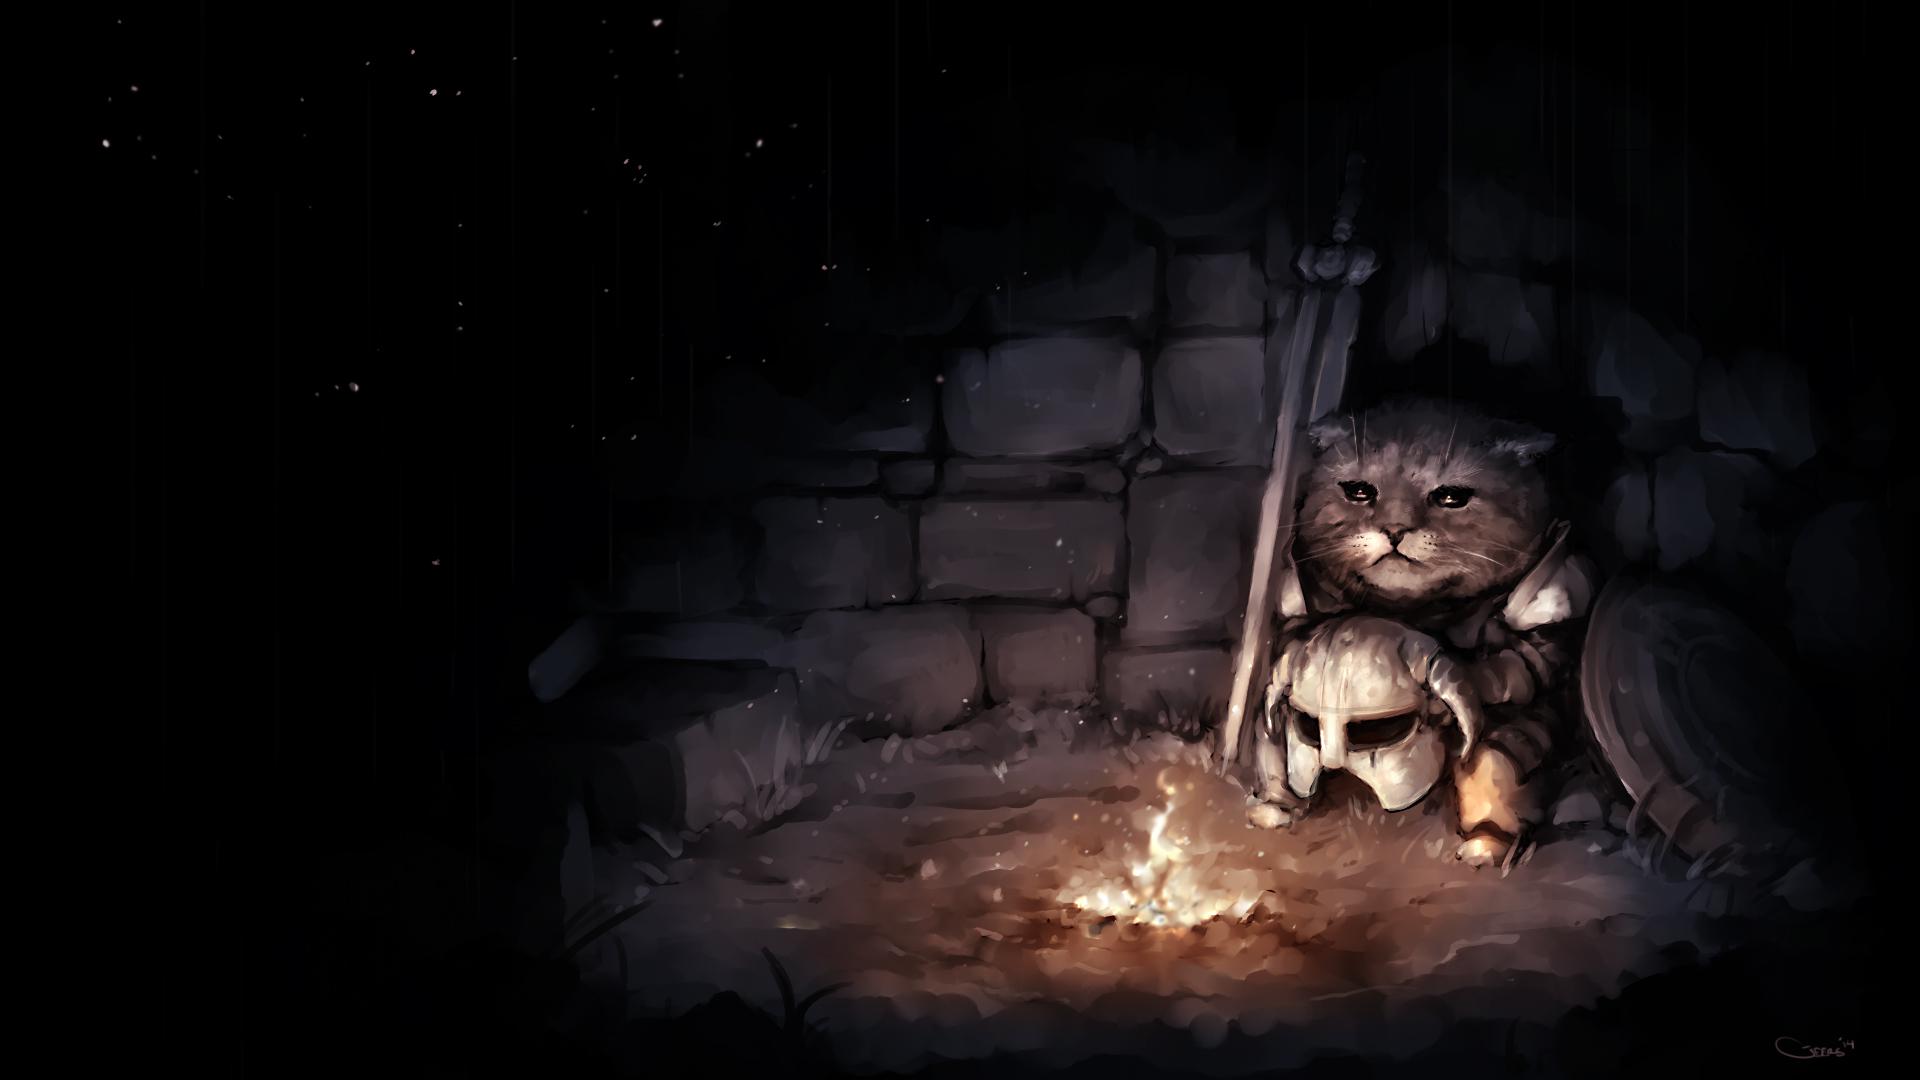 General 1920x1080 The Elder Scrolls The Elder Scrolls V: Skyrim cats dragonborn fire campfire digital art artwork GeersArt